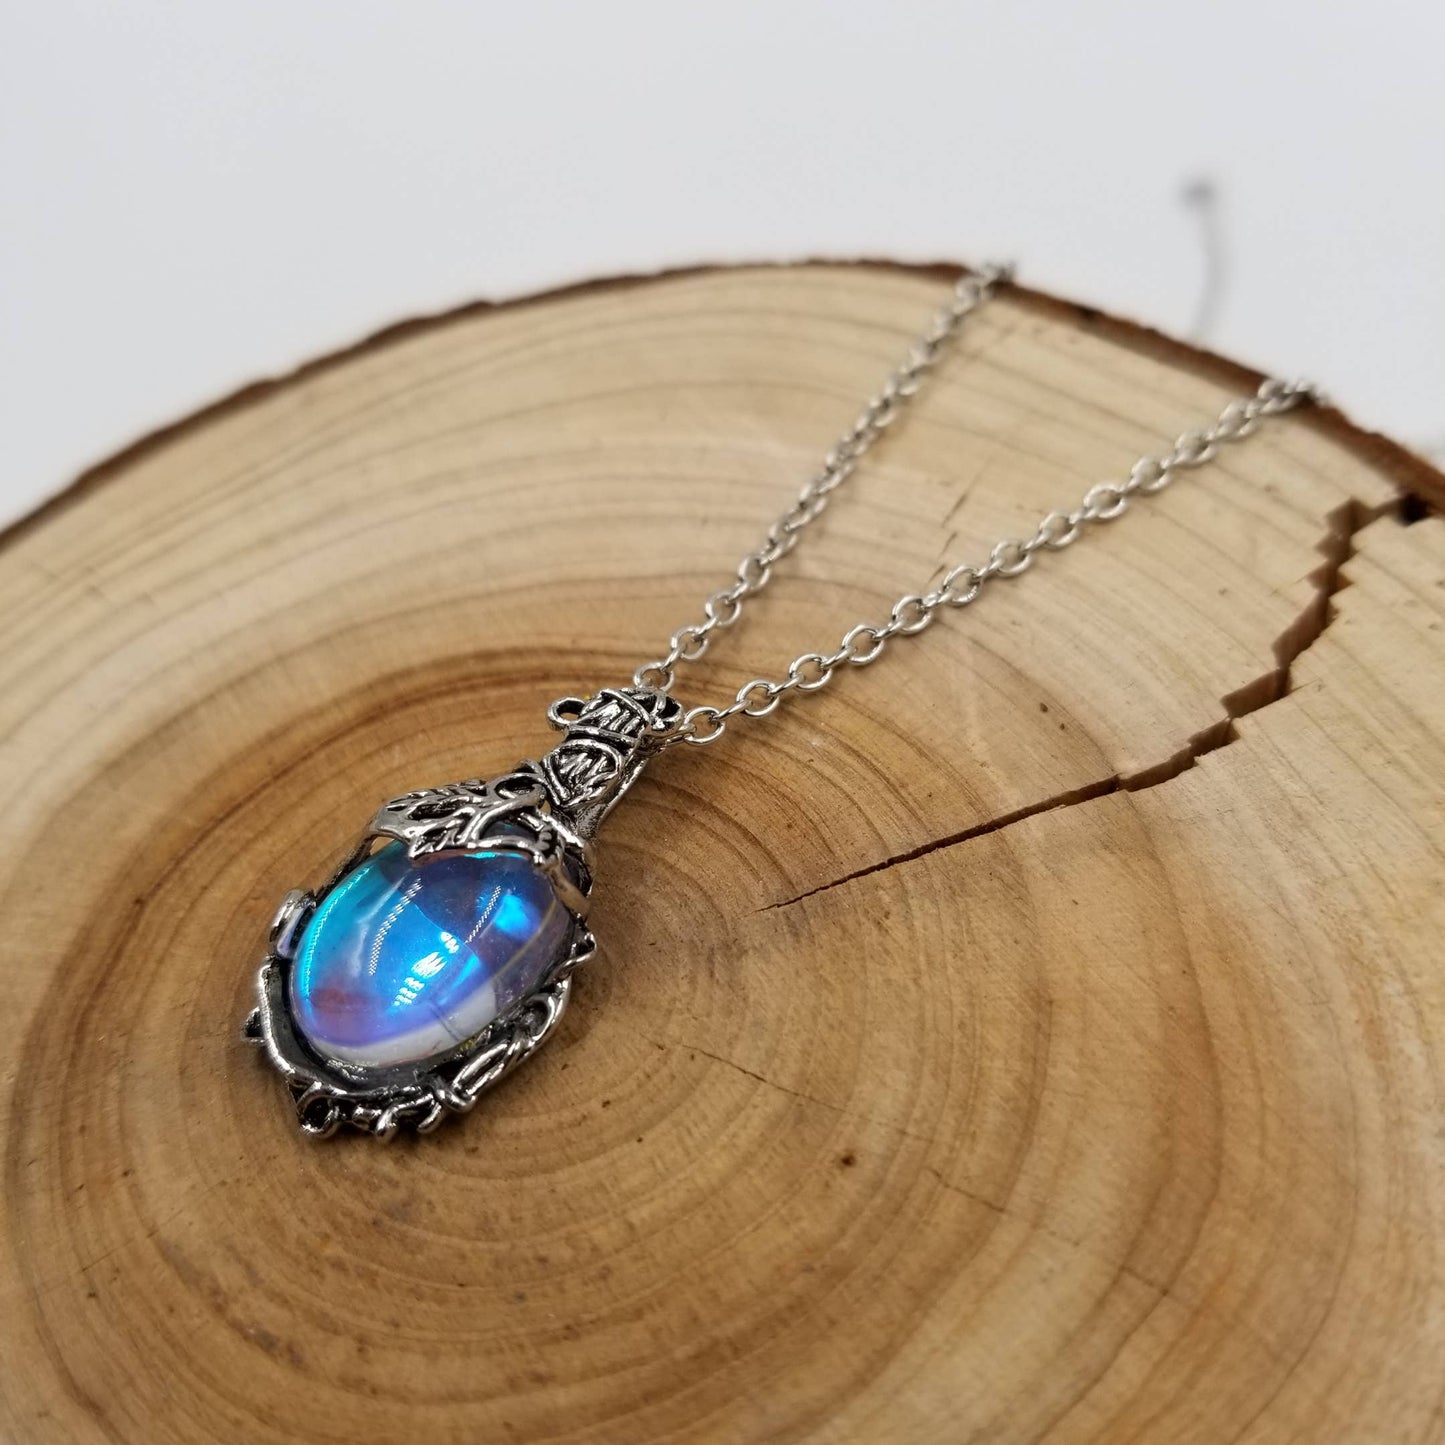 CHAKRA JEWELRY - Vintage Moonlight Stone Necklace